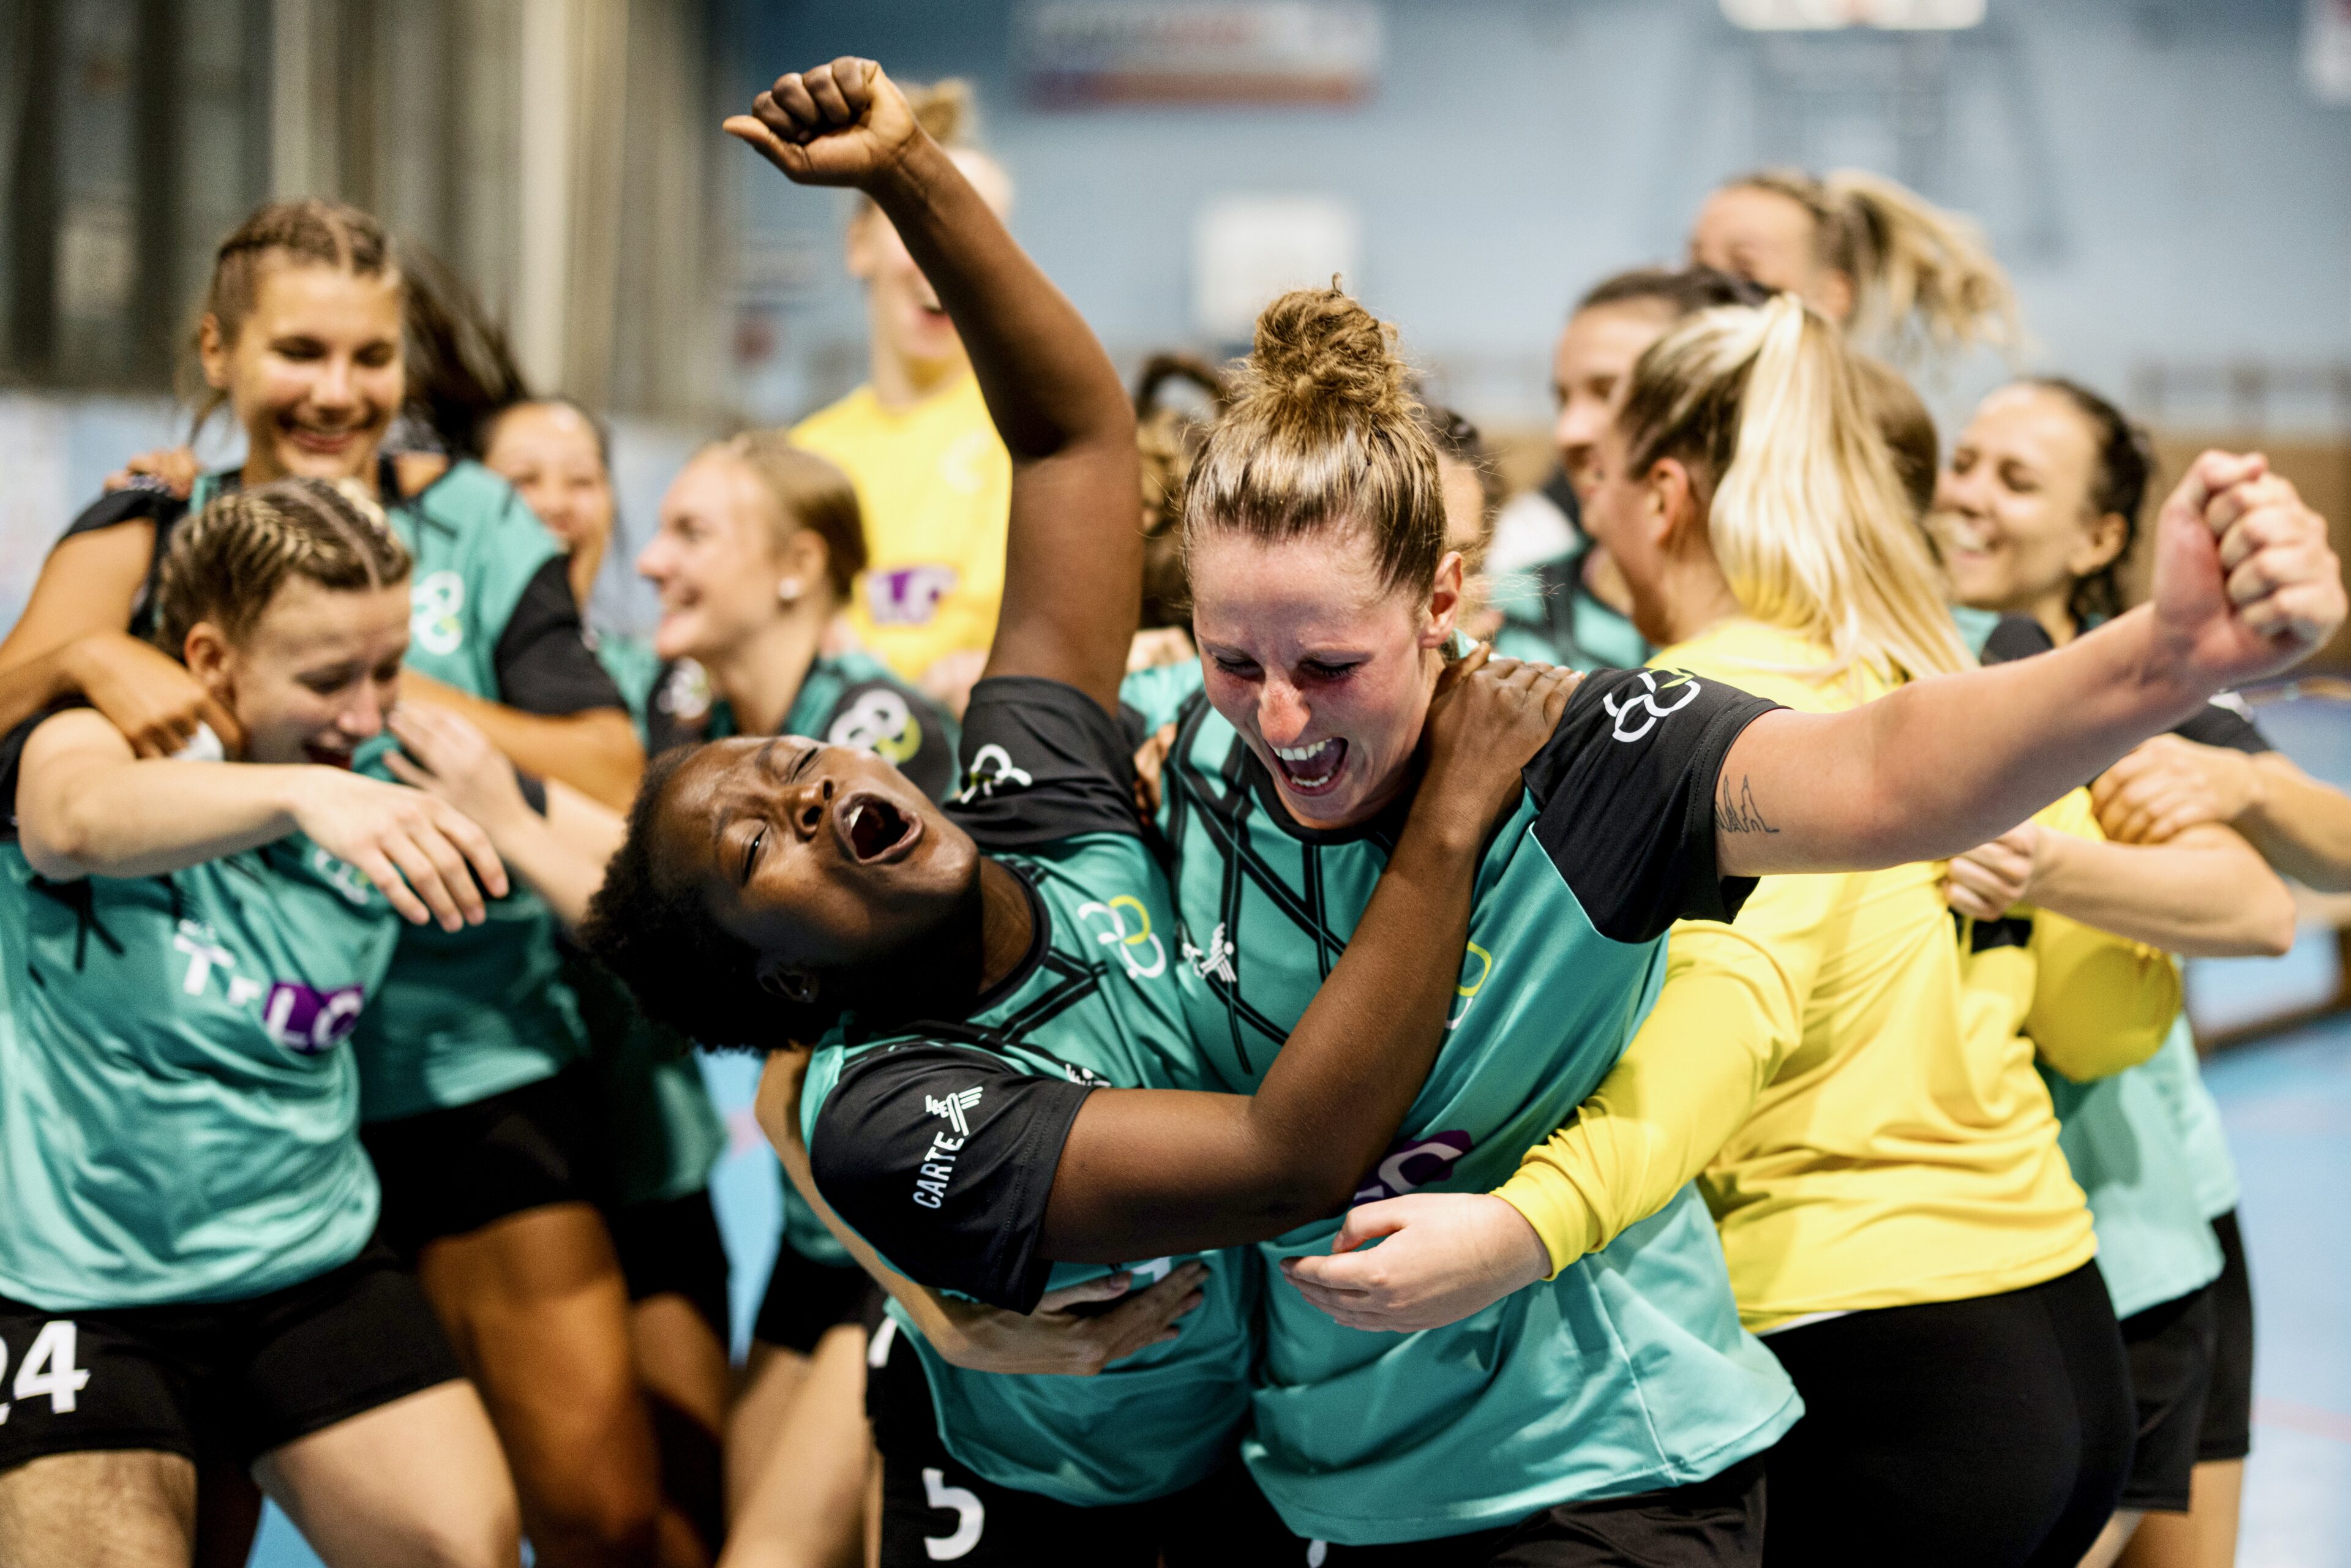 Female handball players celebrating victory after match